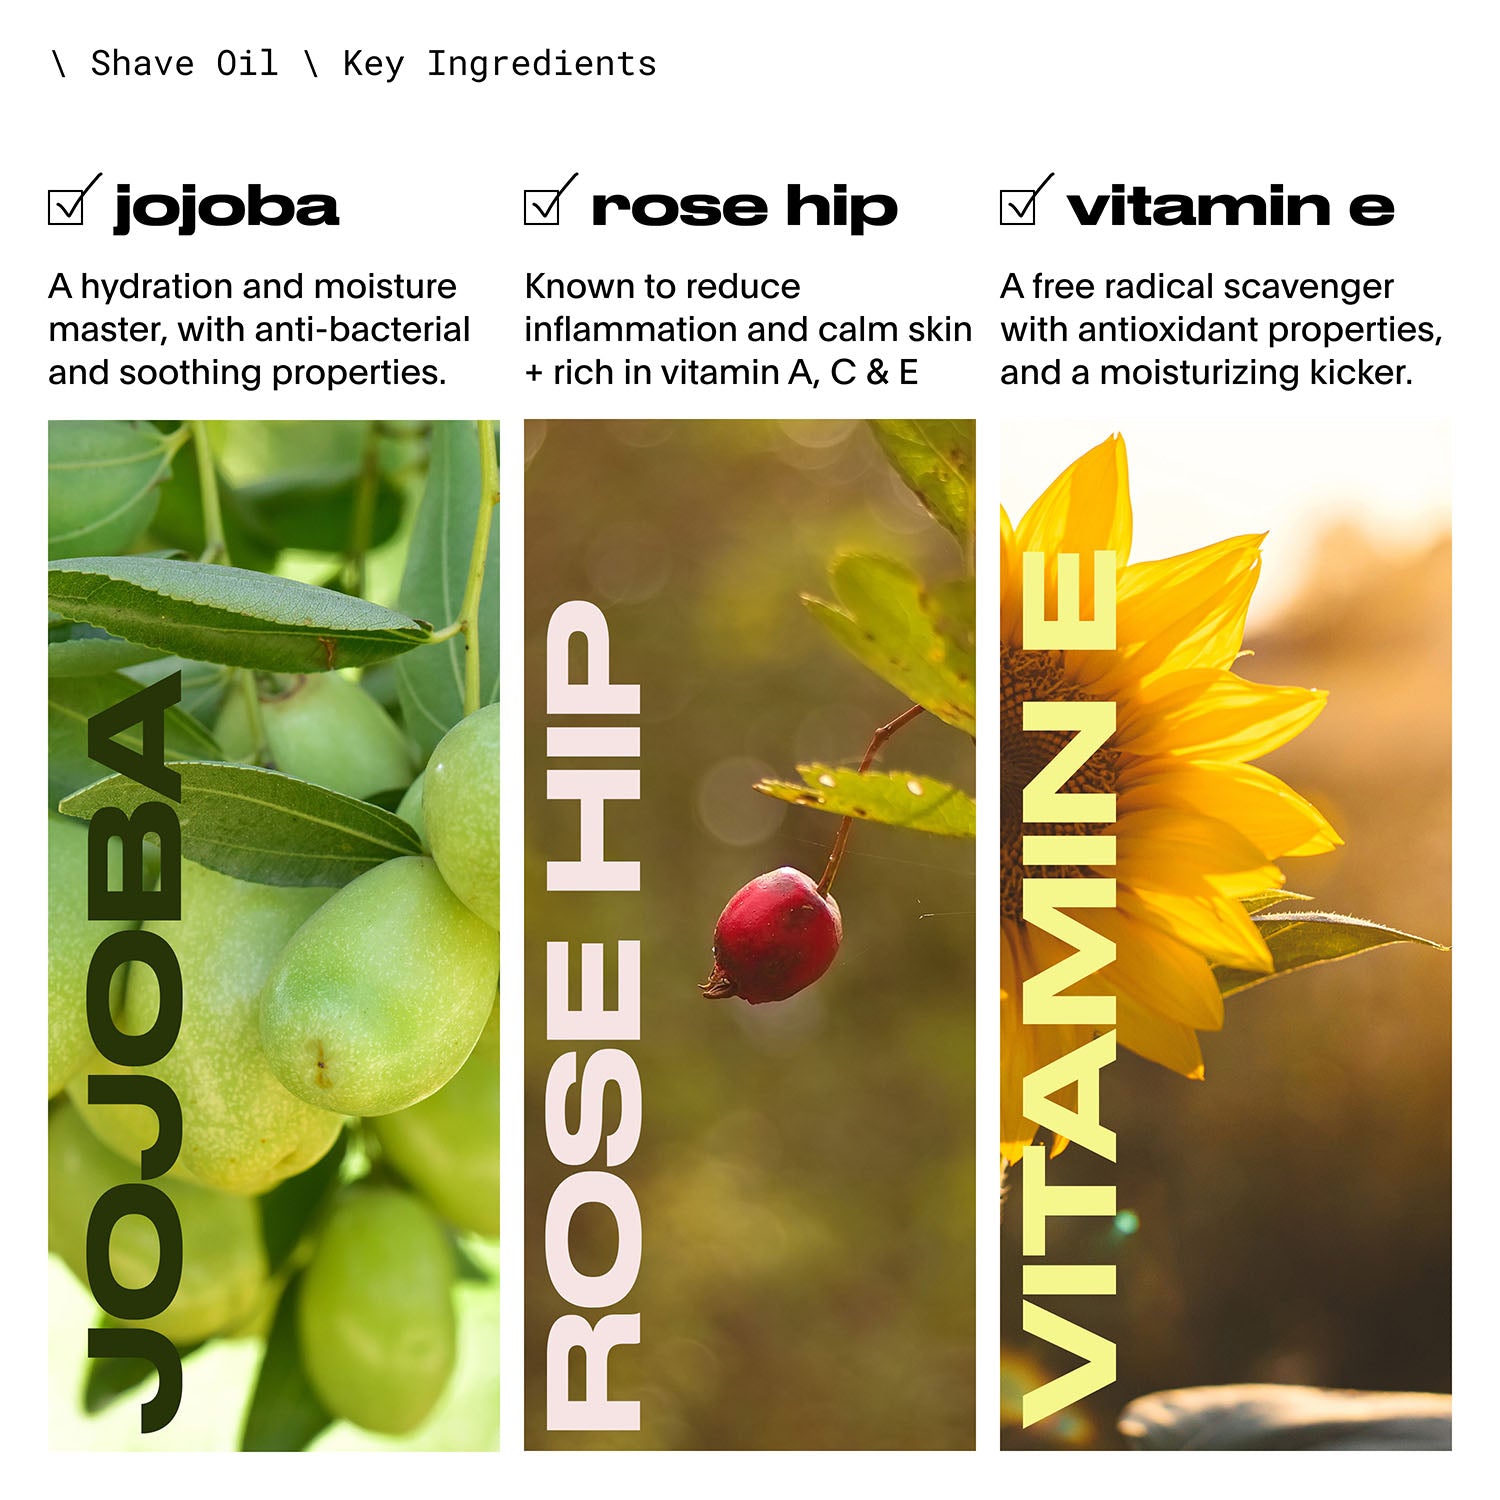 Infographic with three key ingredients: Jojoba, rose hip and vitamin E.